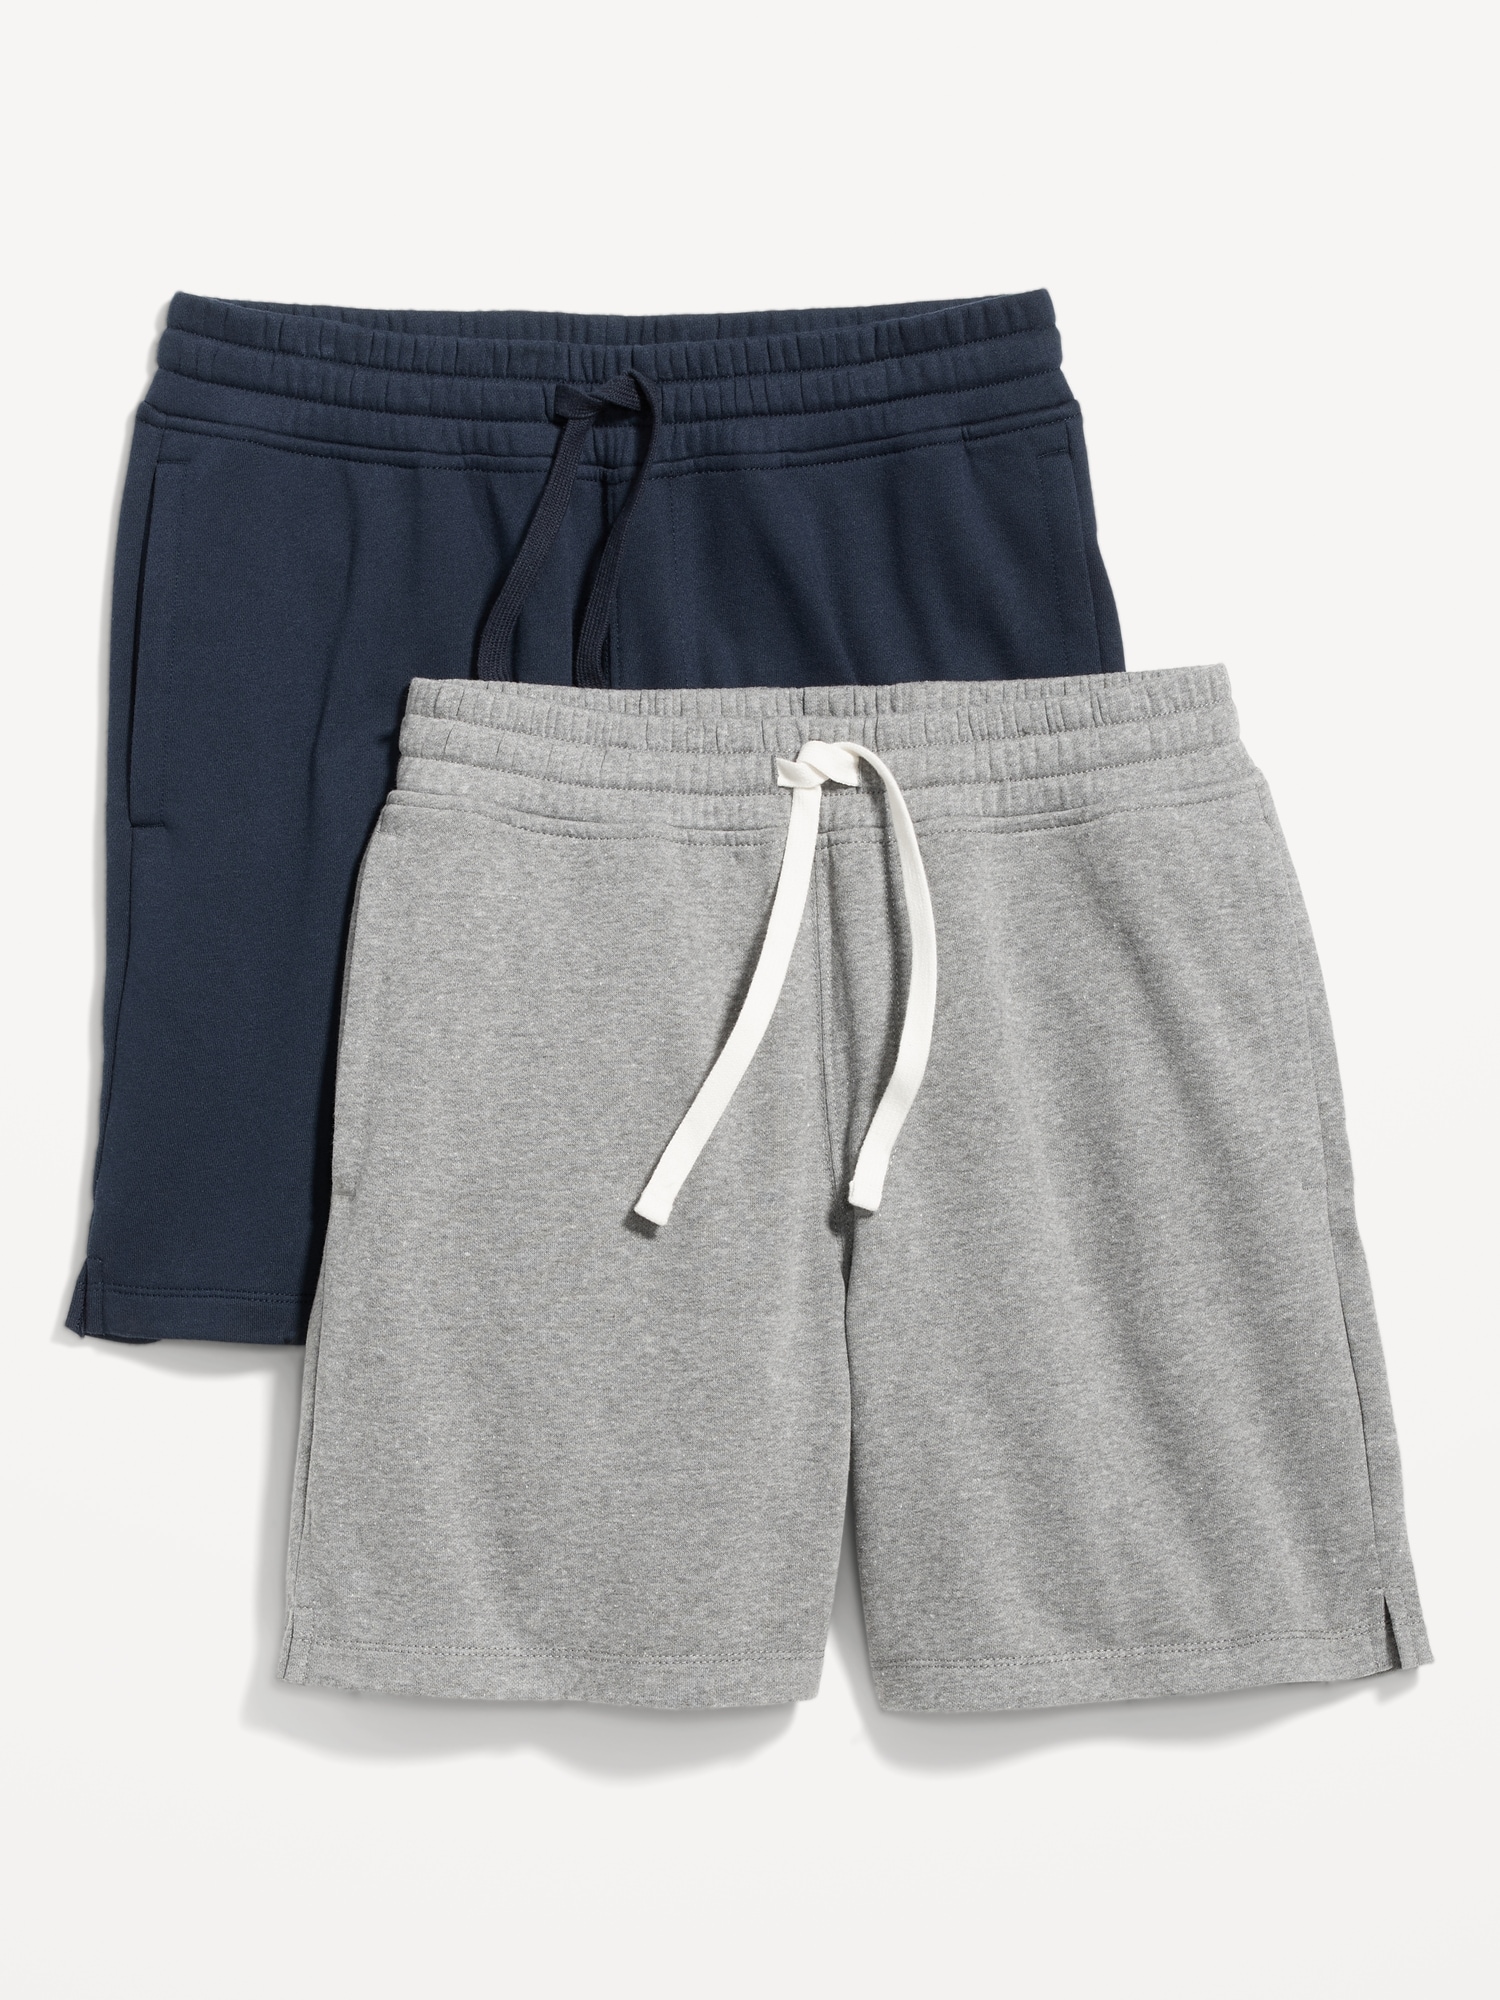 Mens Jogger Shorts - Sweat Shorts for Men